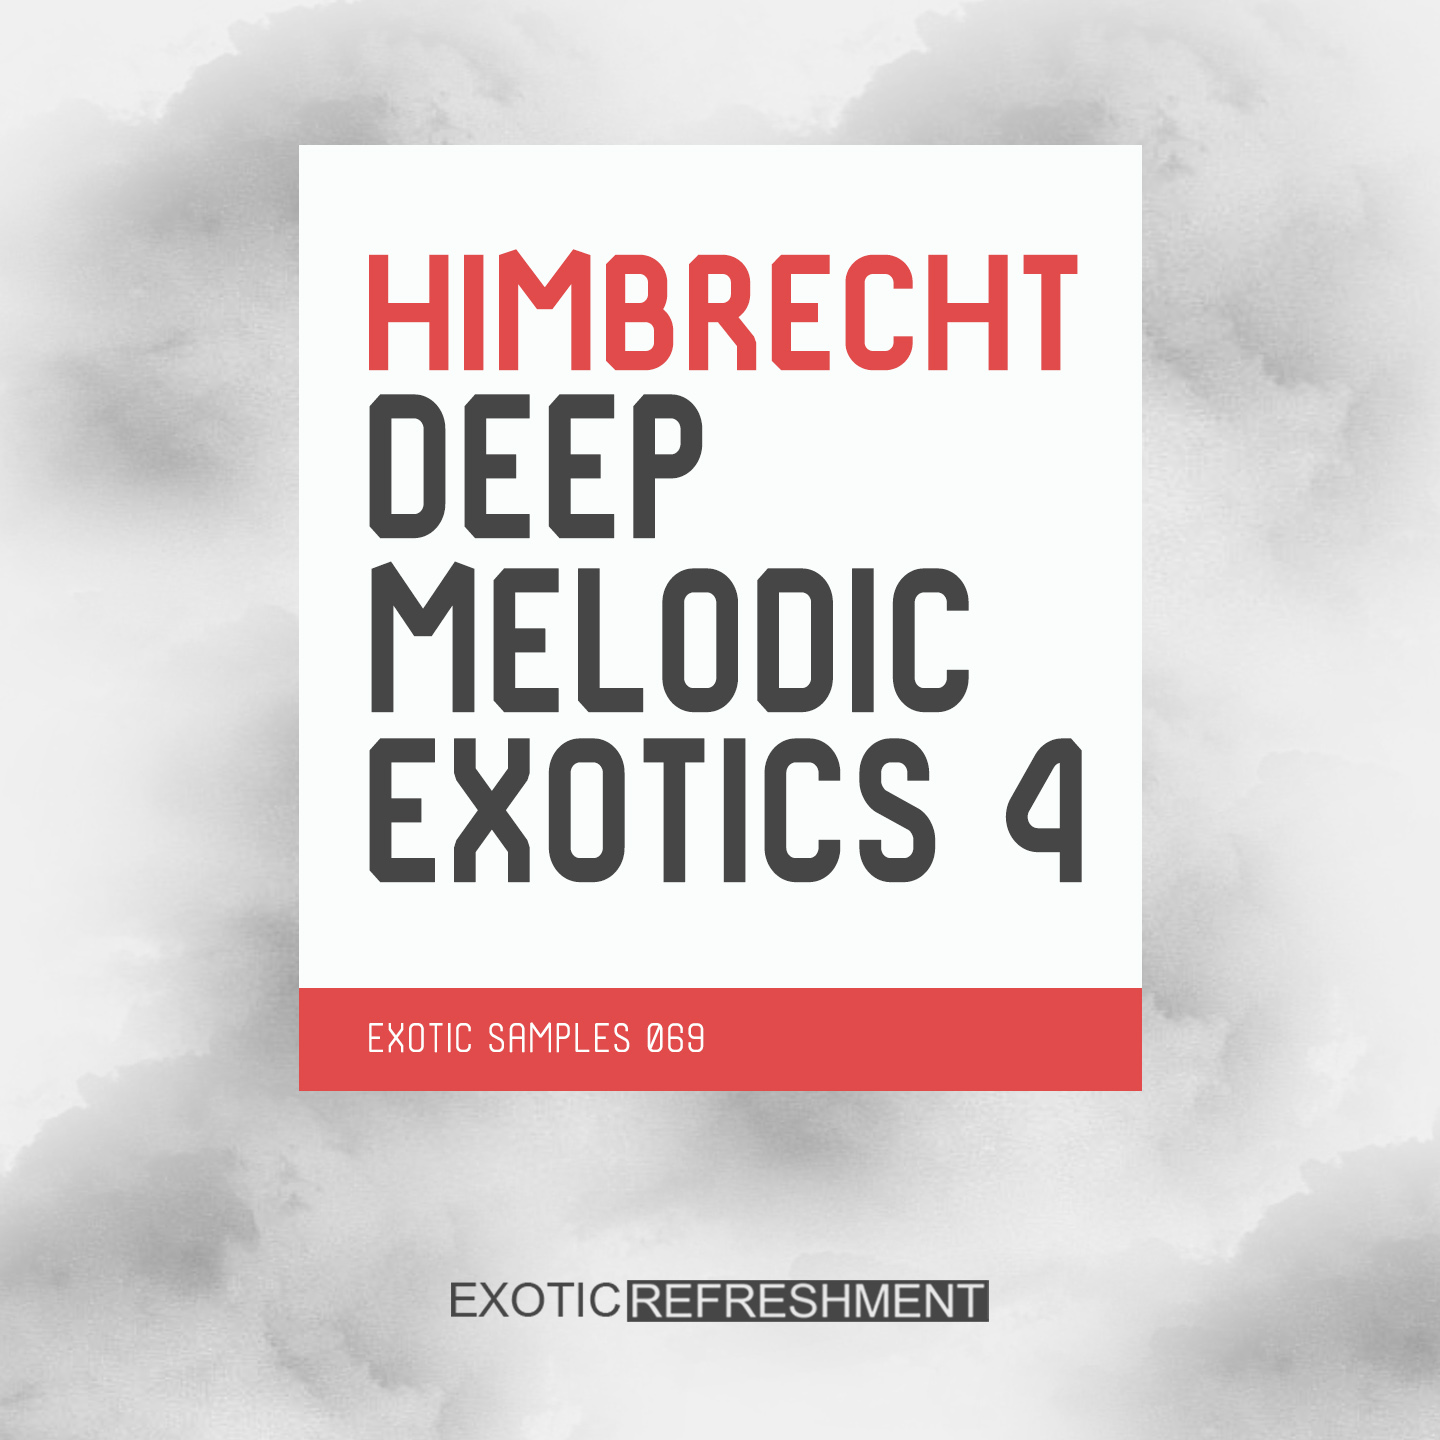 Himbrecht Deep Melodic Exotics 4 - Sample Pack